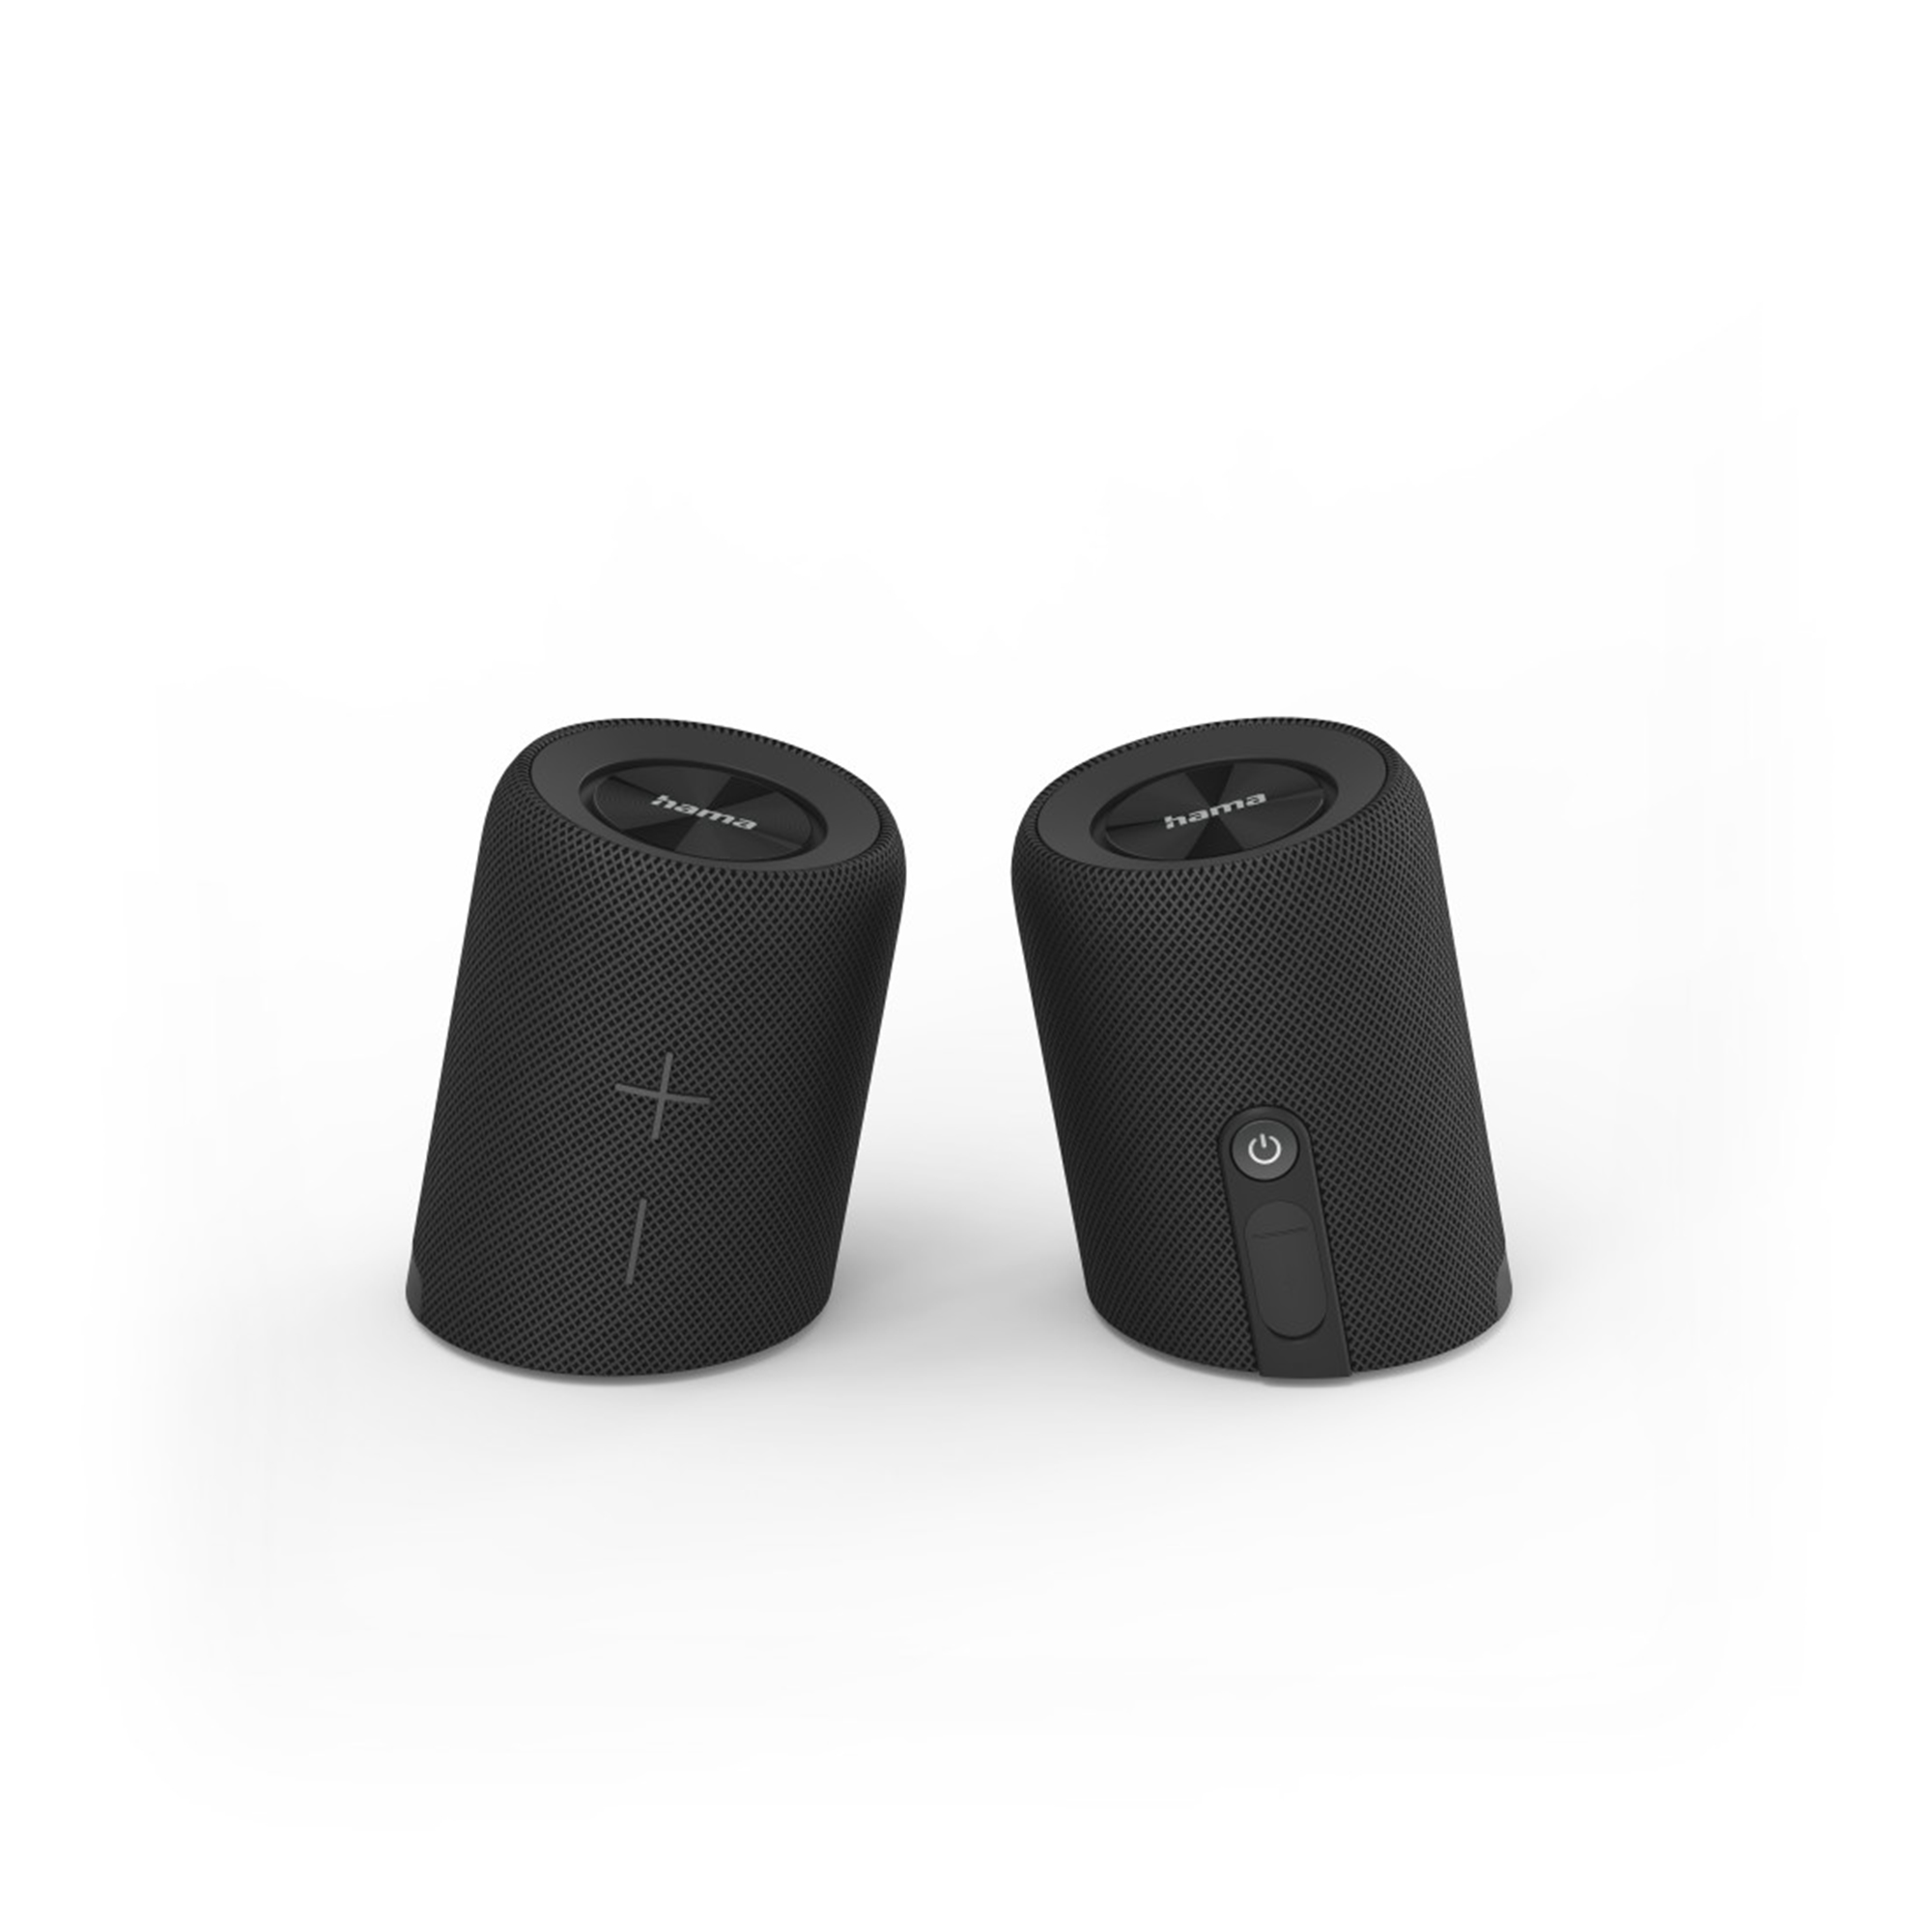 Schwarz) Bluetooth-Lautsprecher Twin (Stereo, HAMA 2.0